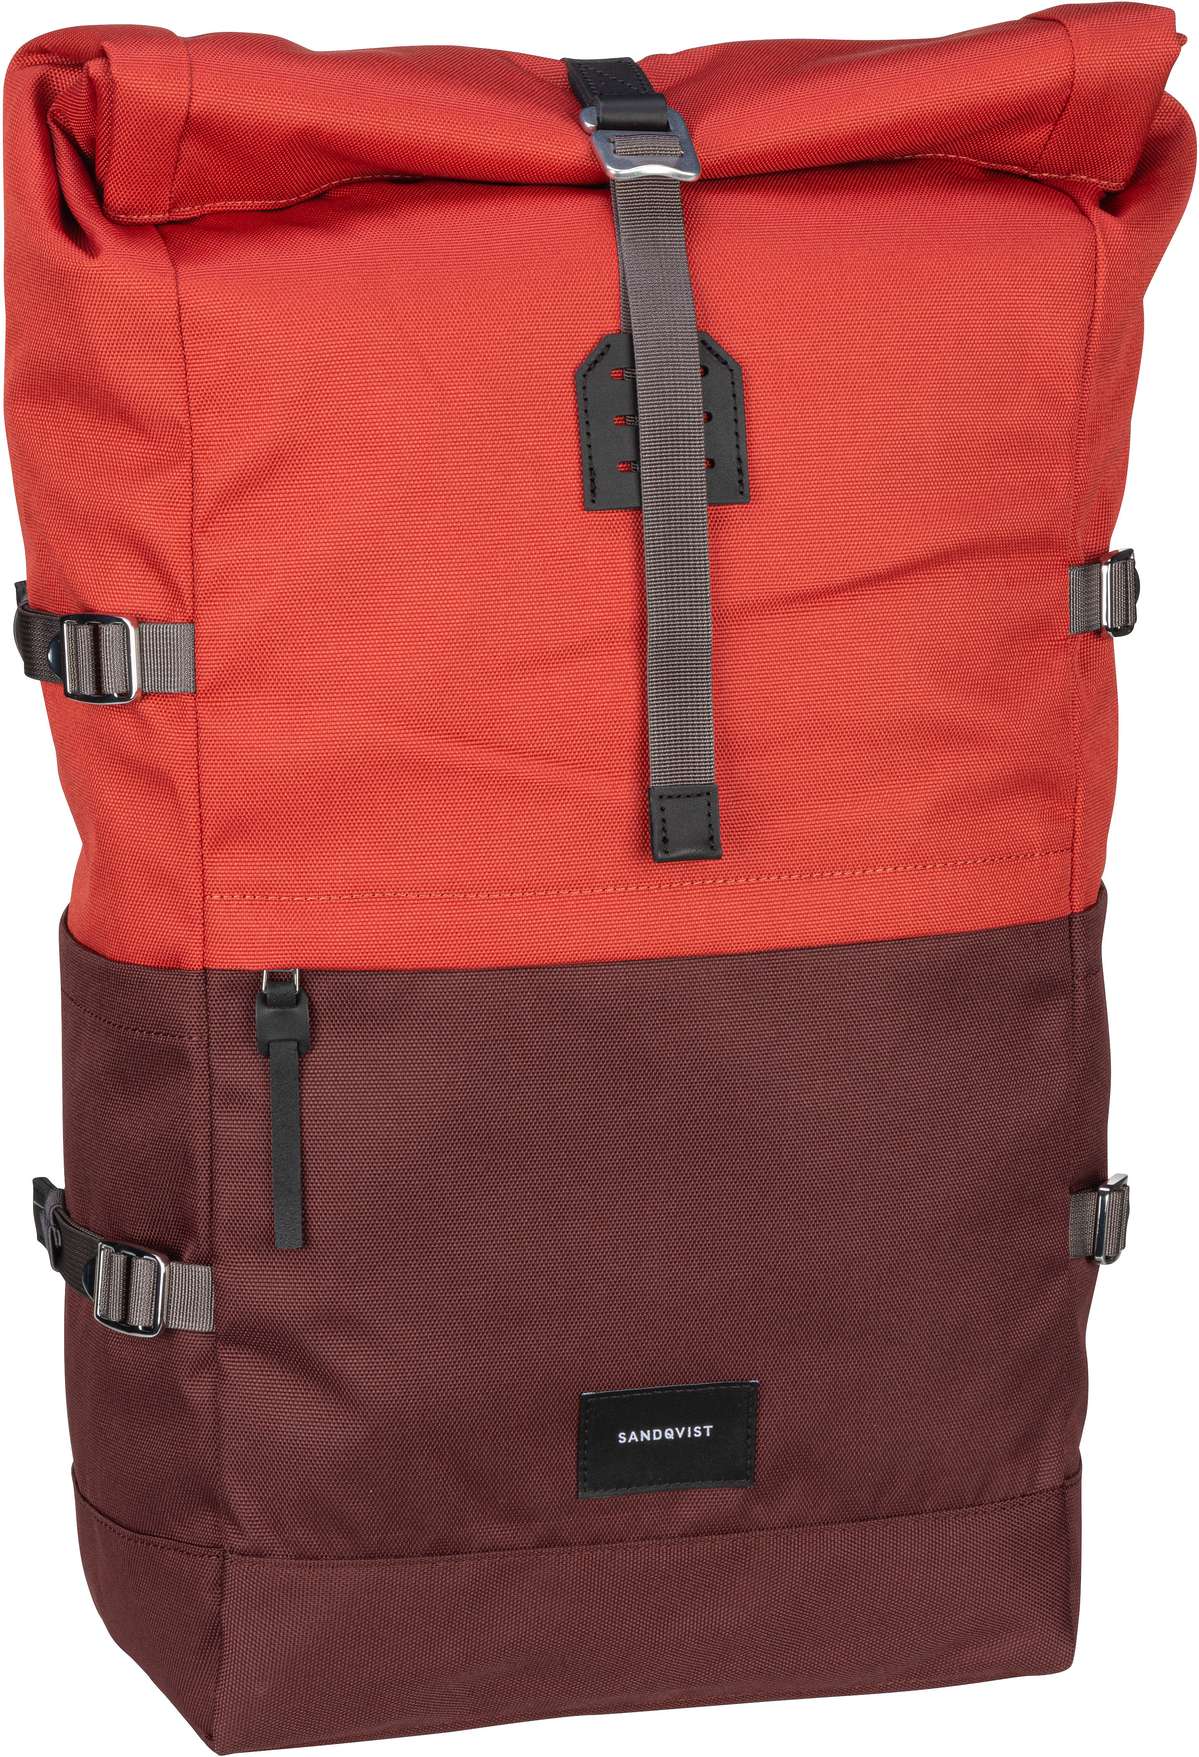 Sandqvist Bernt Rolltop Backpack - Multi Moss Red/Black Leather